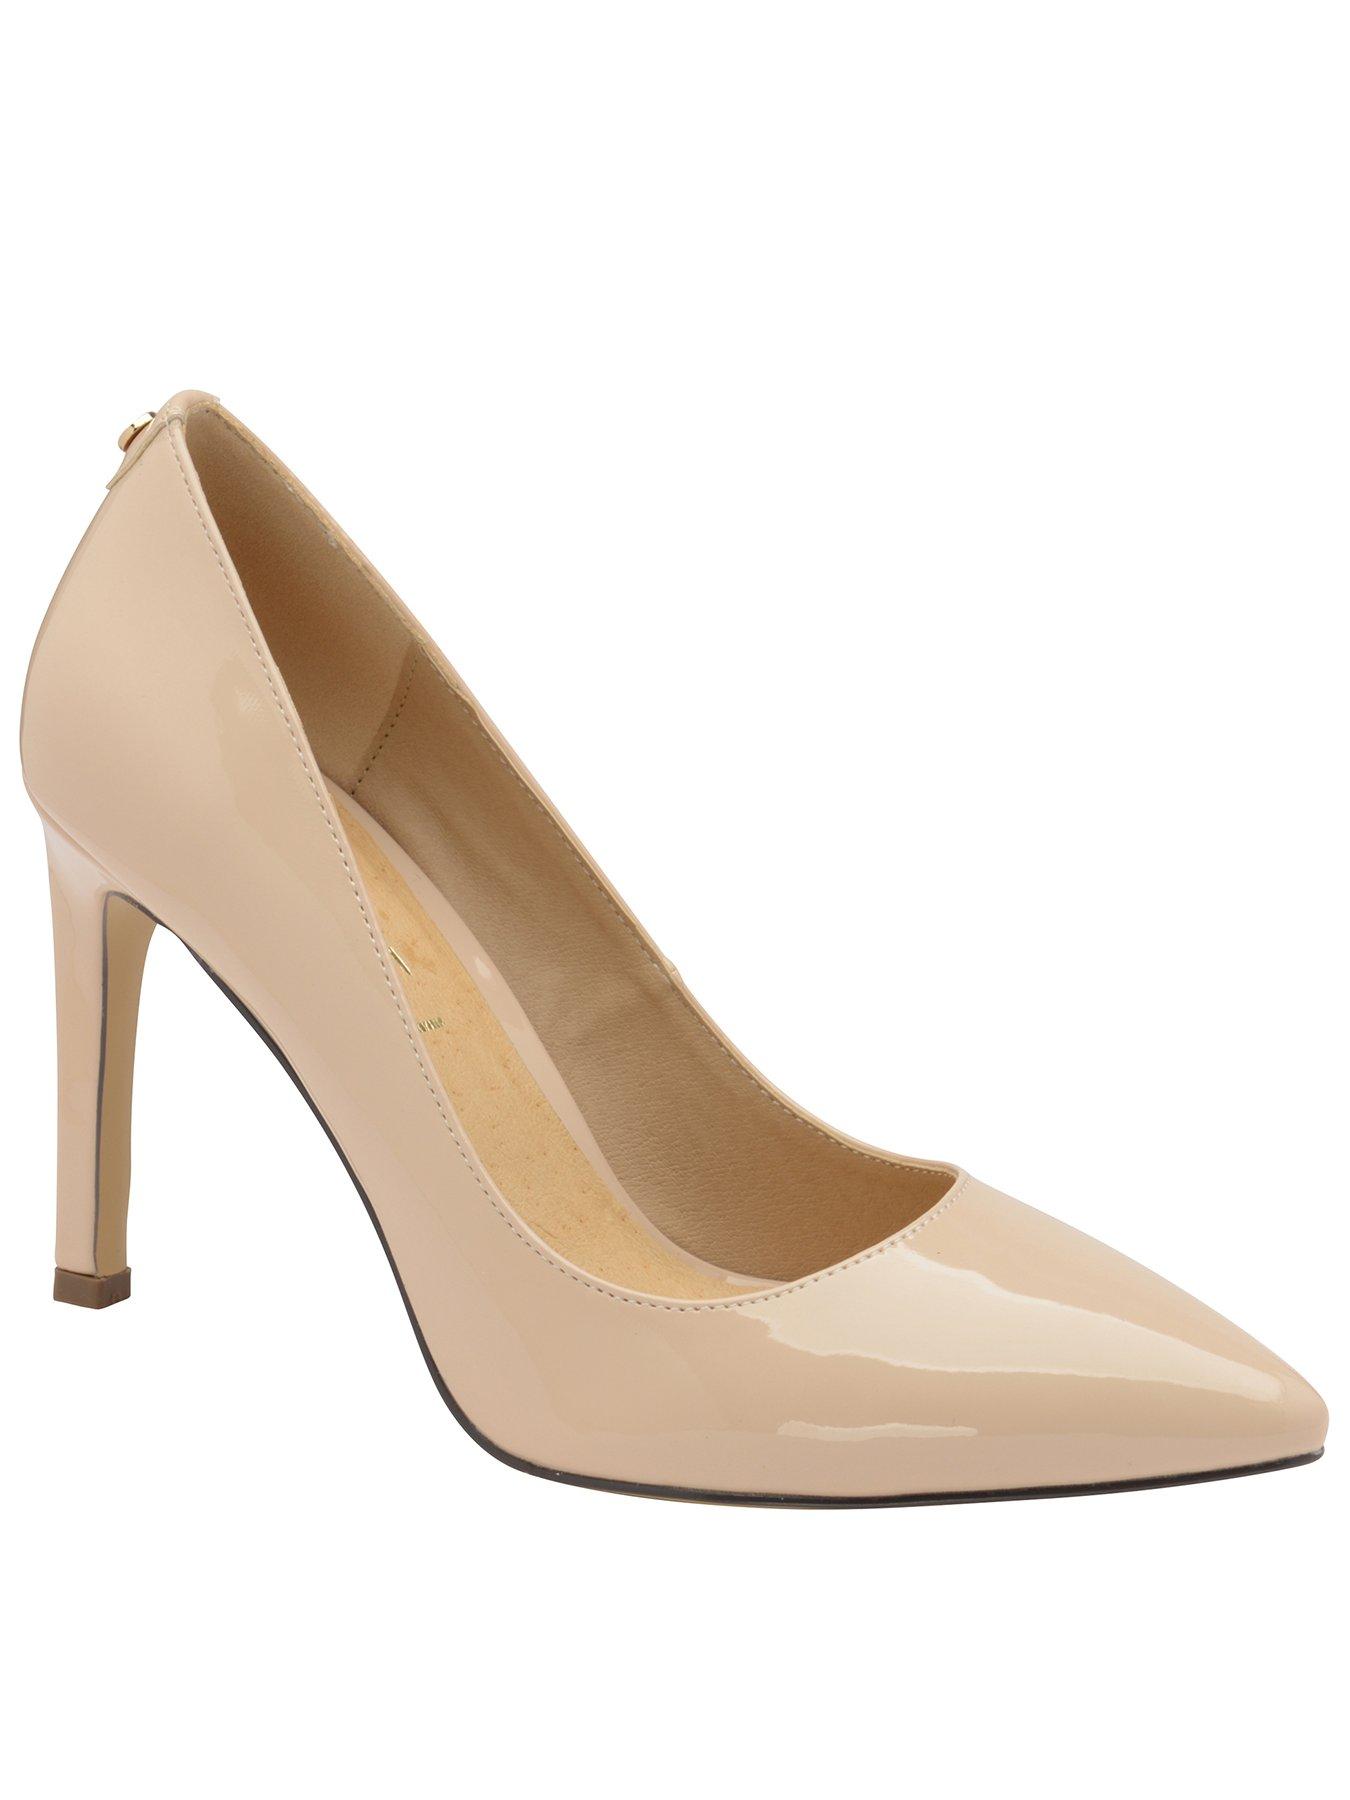 Carvela Comfort Arabella Suede Cone Heel Open Toe Court Shoes, Pink Blush  at John Lewis & Partners